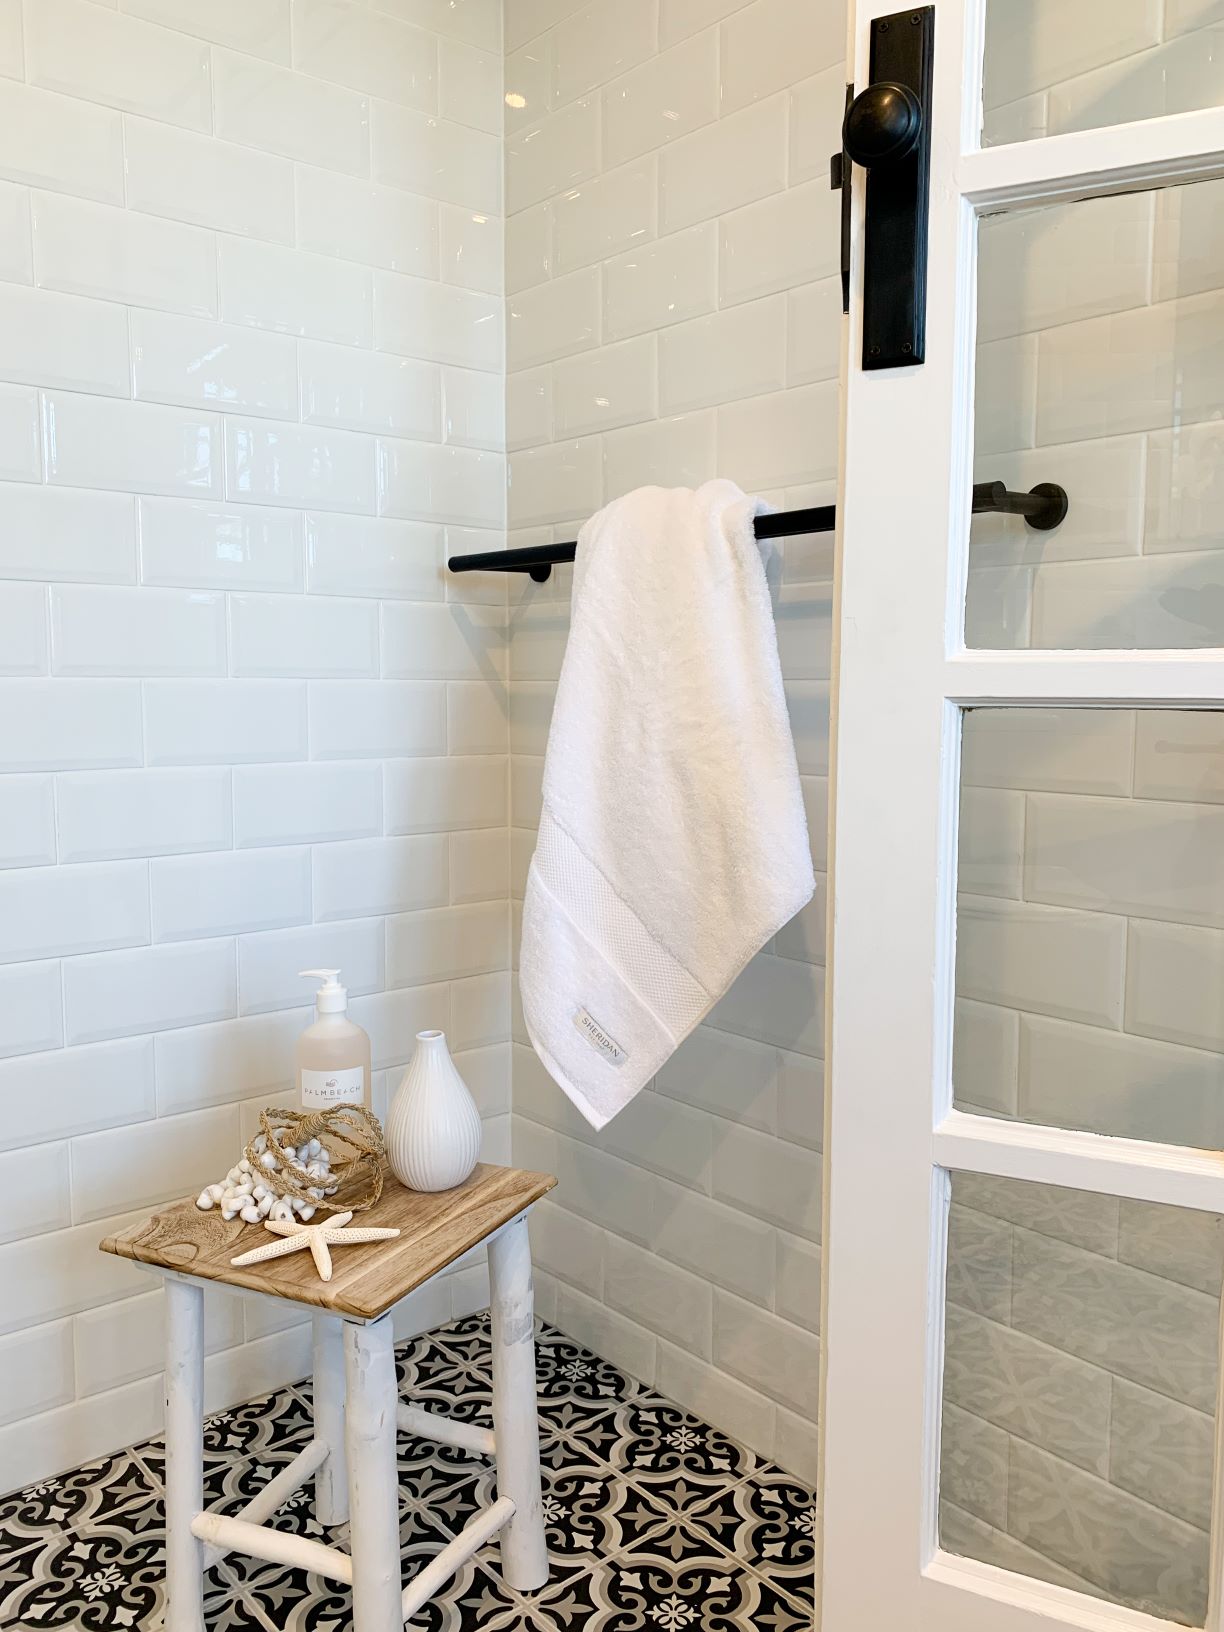 ascot ensuite white wall tiles black and white floor tiles french doors towel rail